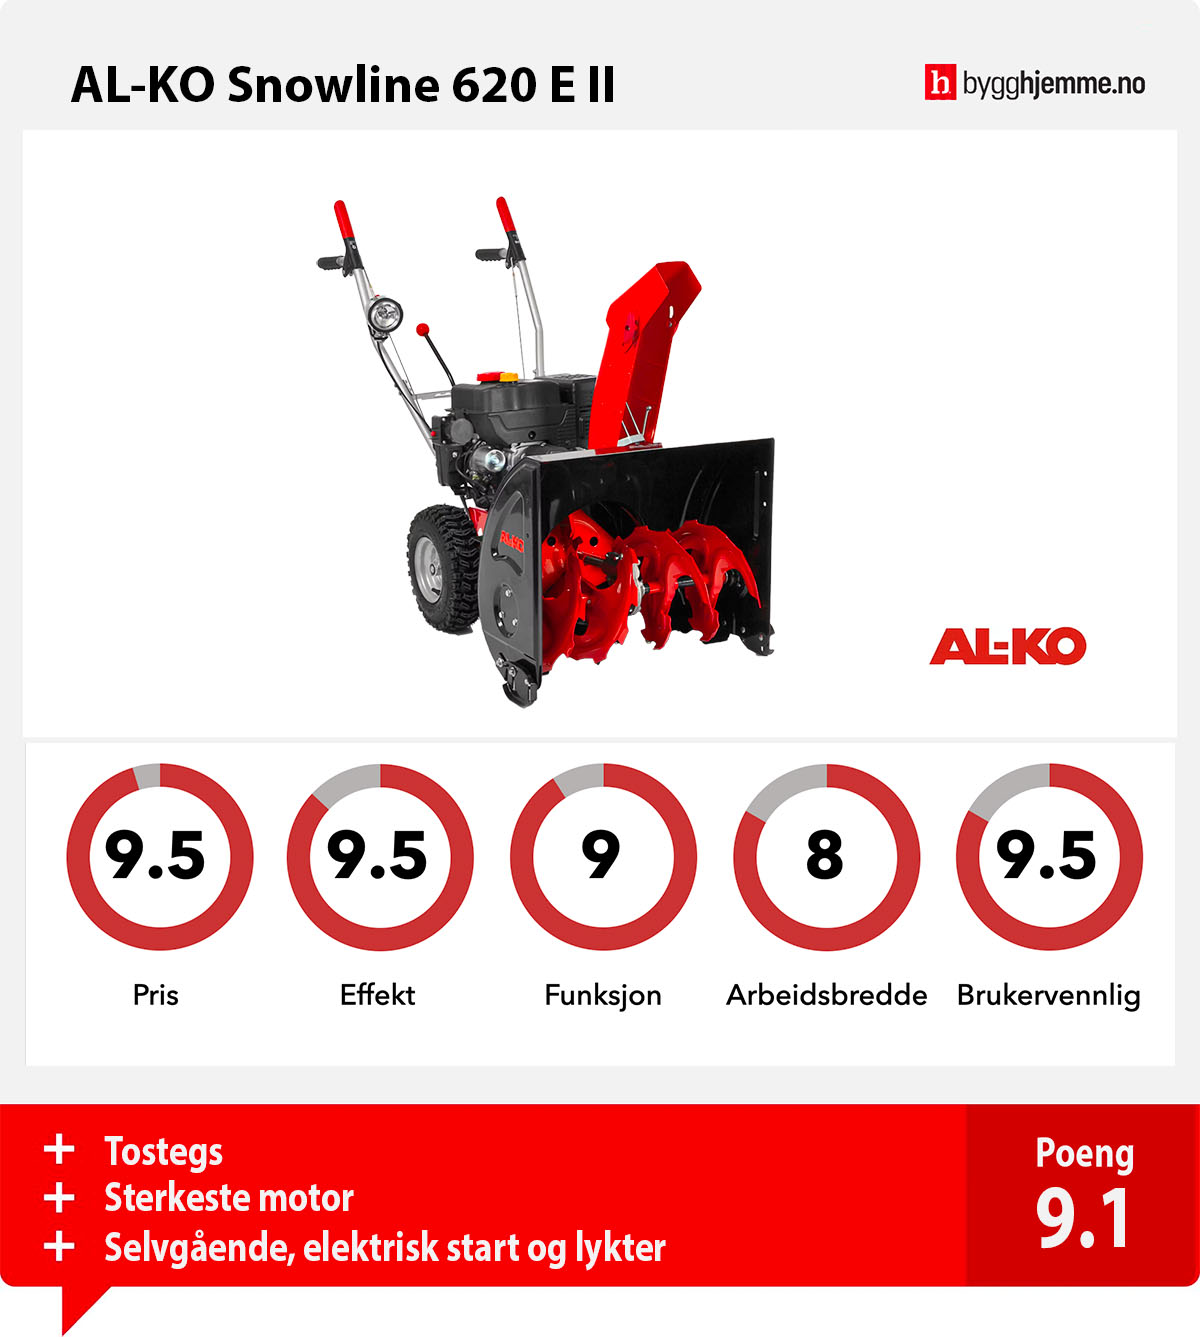 Snøfreser AL-KO Snowline 620 E II | Bygghjemme